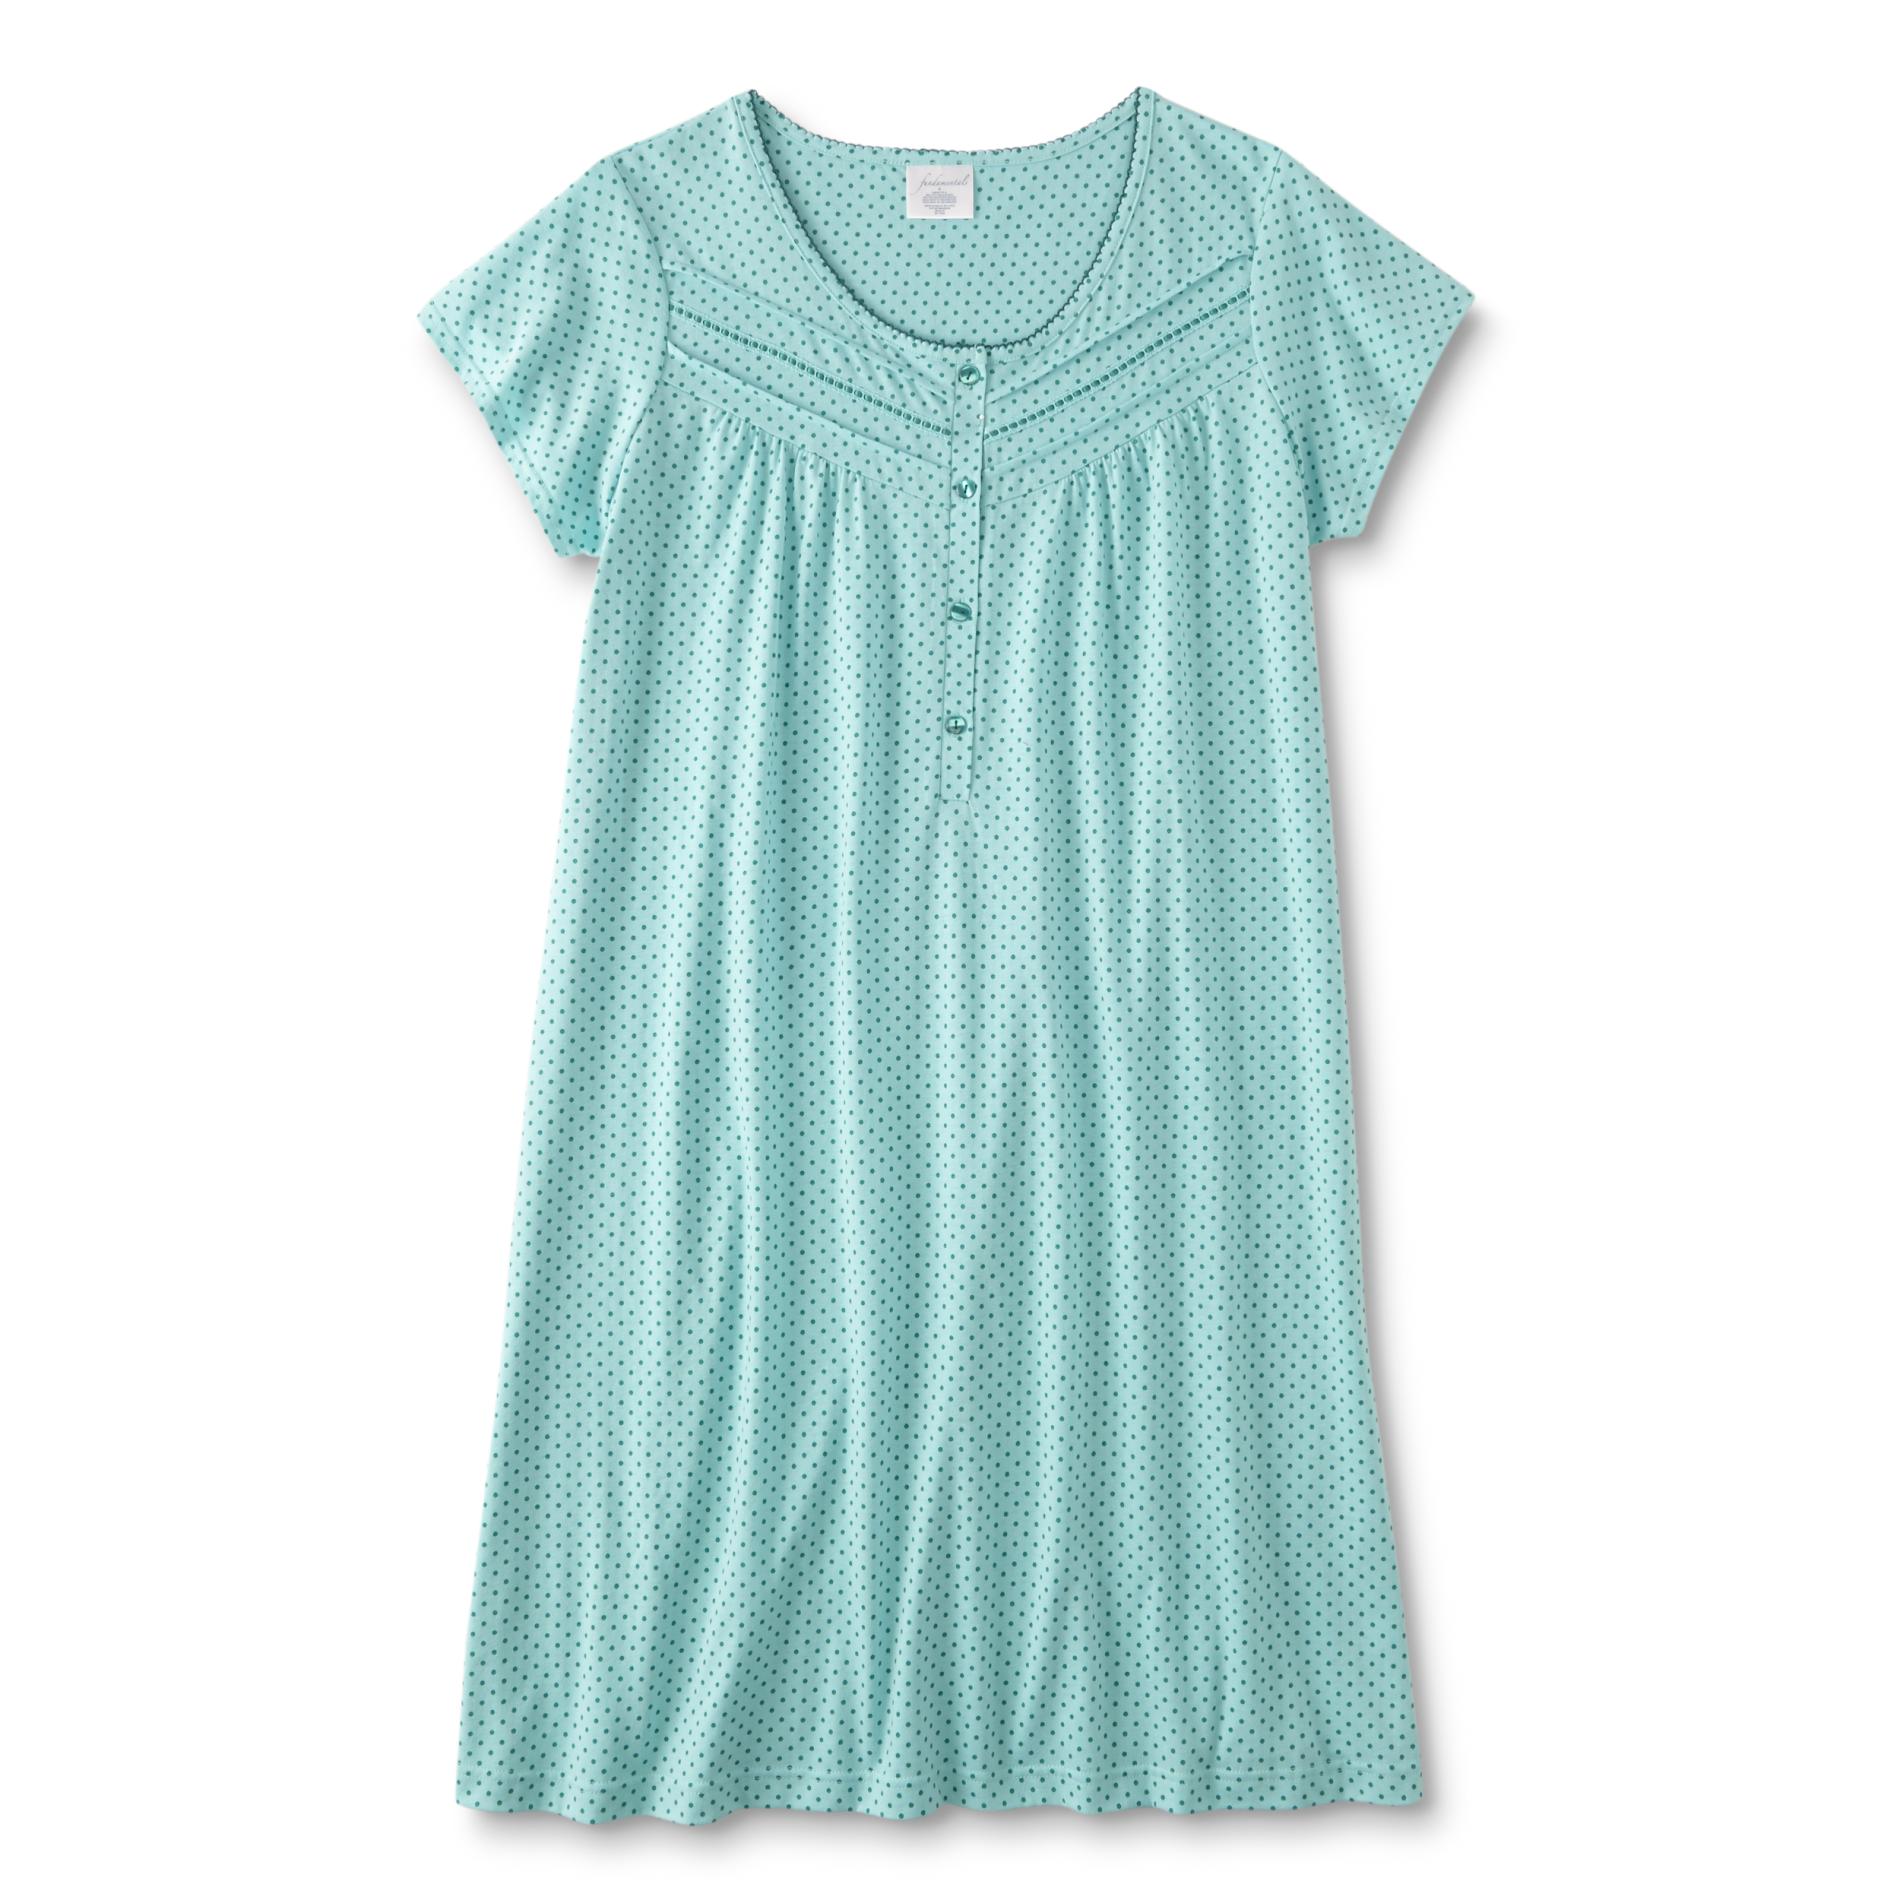 Fundamentals Women's Short-Sleeve Nightgown - Dots